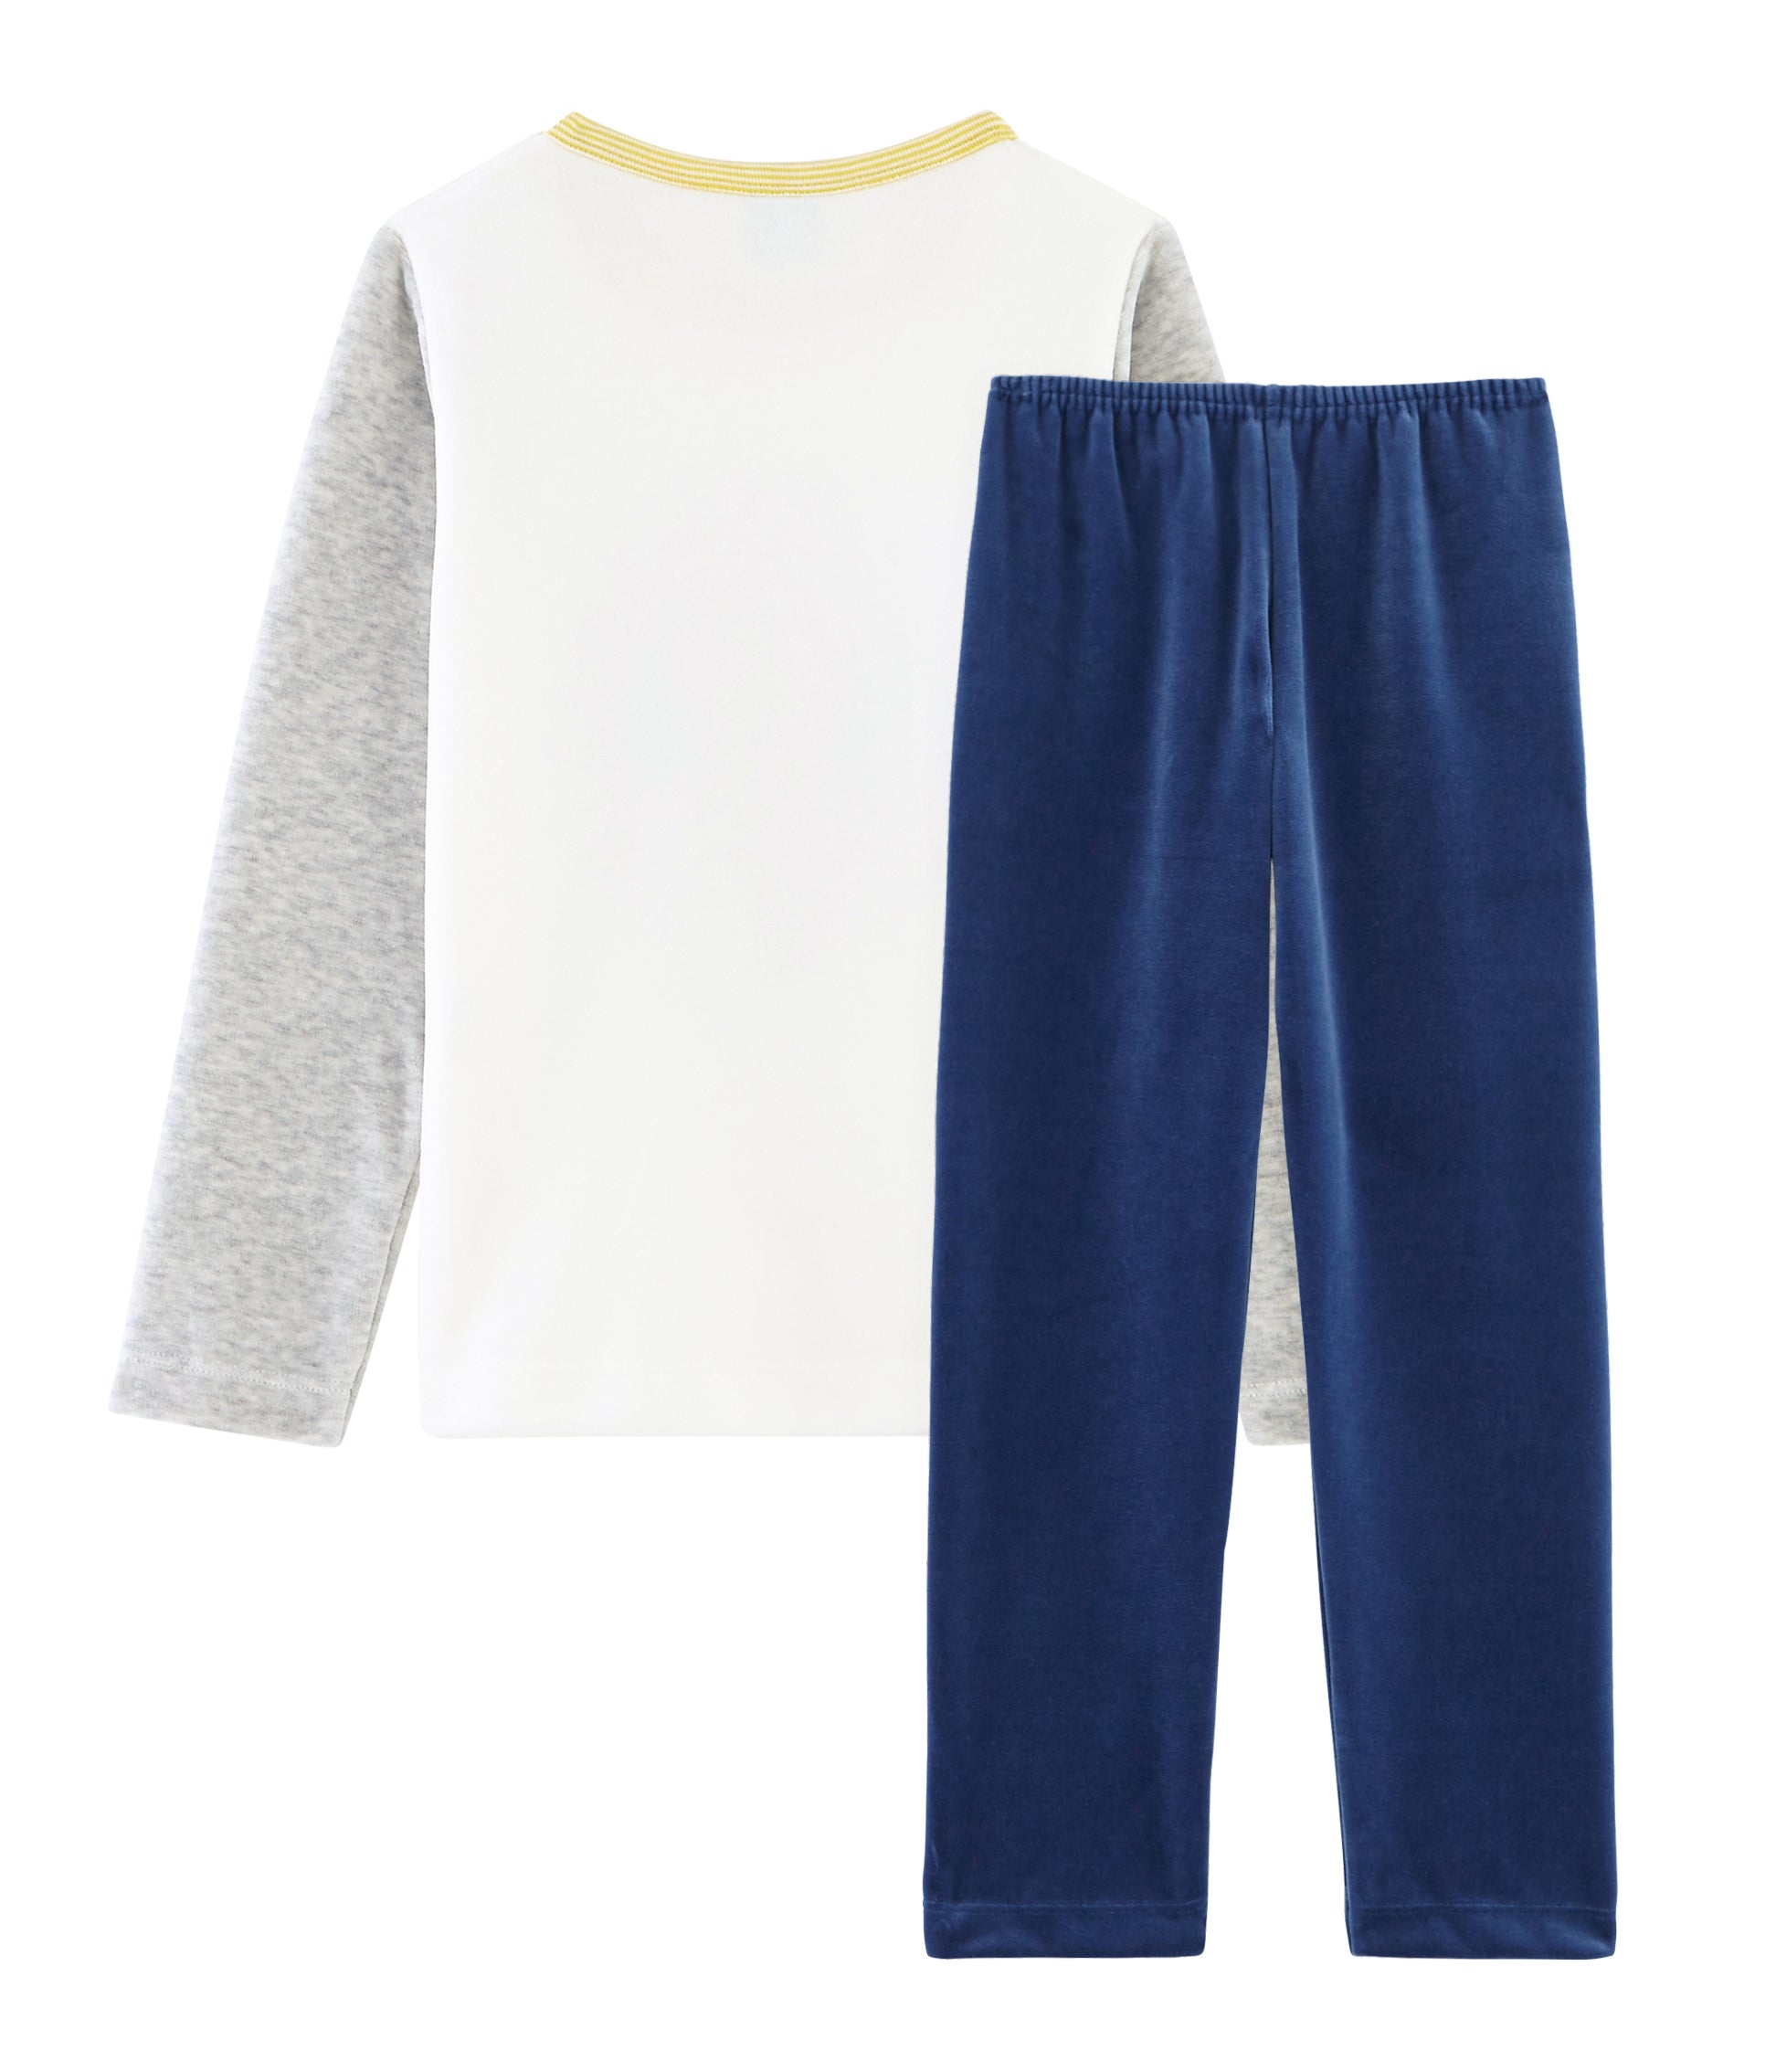 Boys White & Blue Cotton Nightwear Set